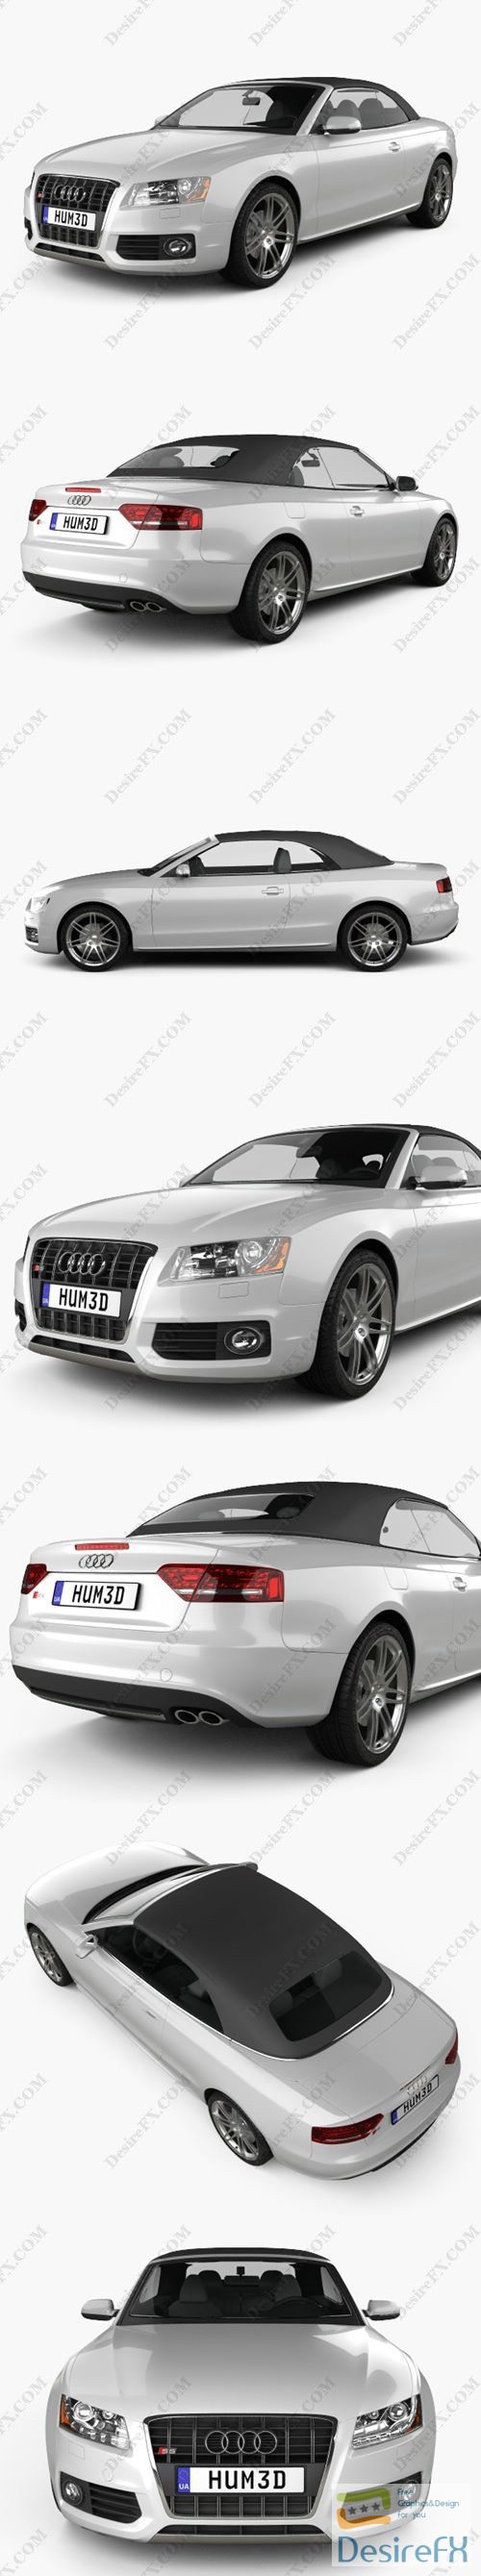 Audi S5 Convertible 2010 3D Model